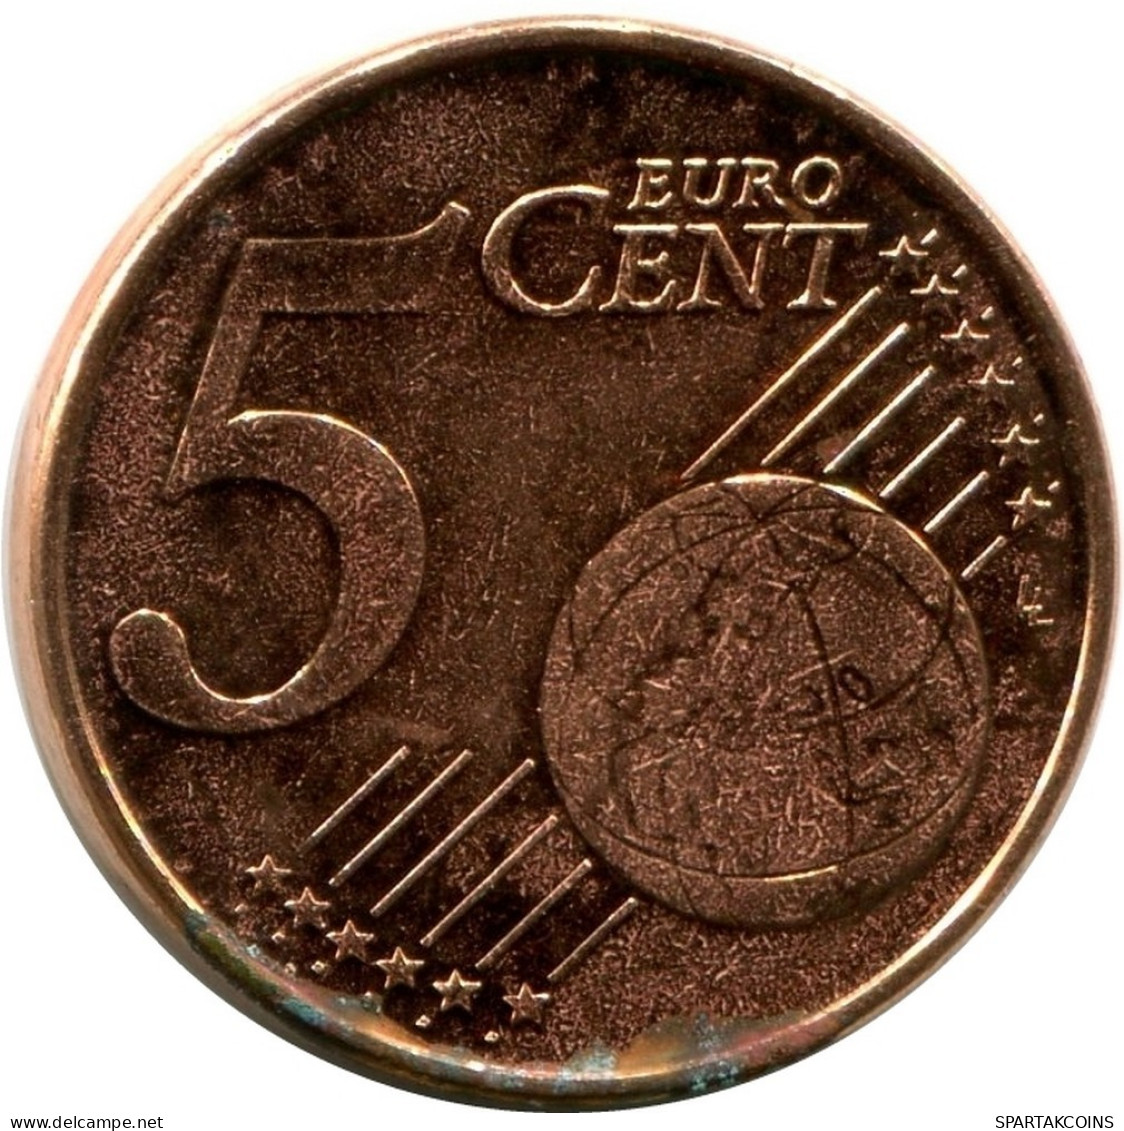 5 EURO CENT 1999 BELGIUM Coin UNC #M10260.U.A - Belgique